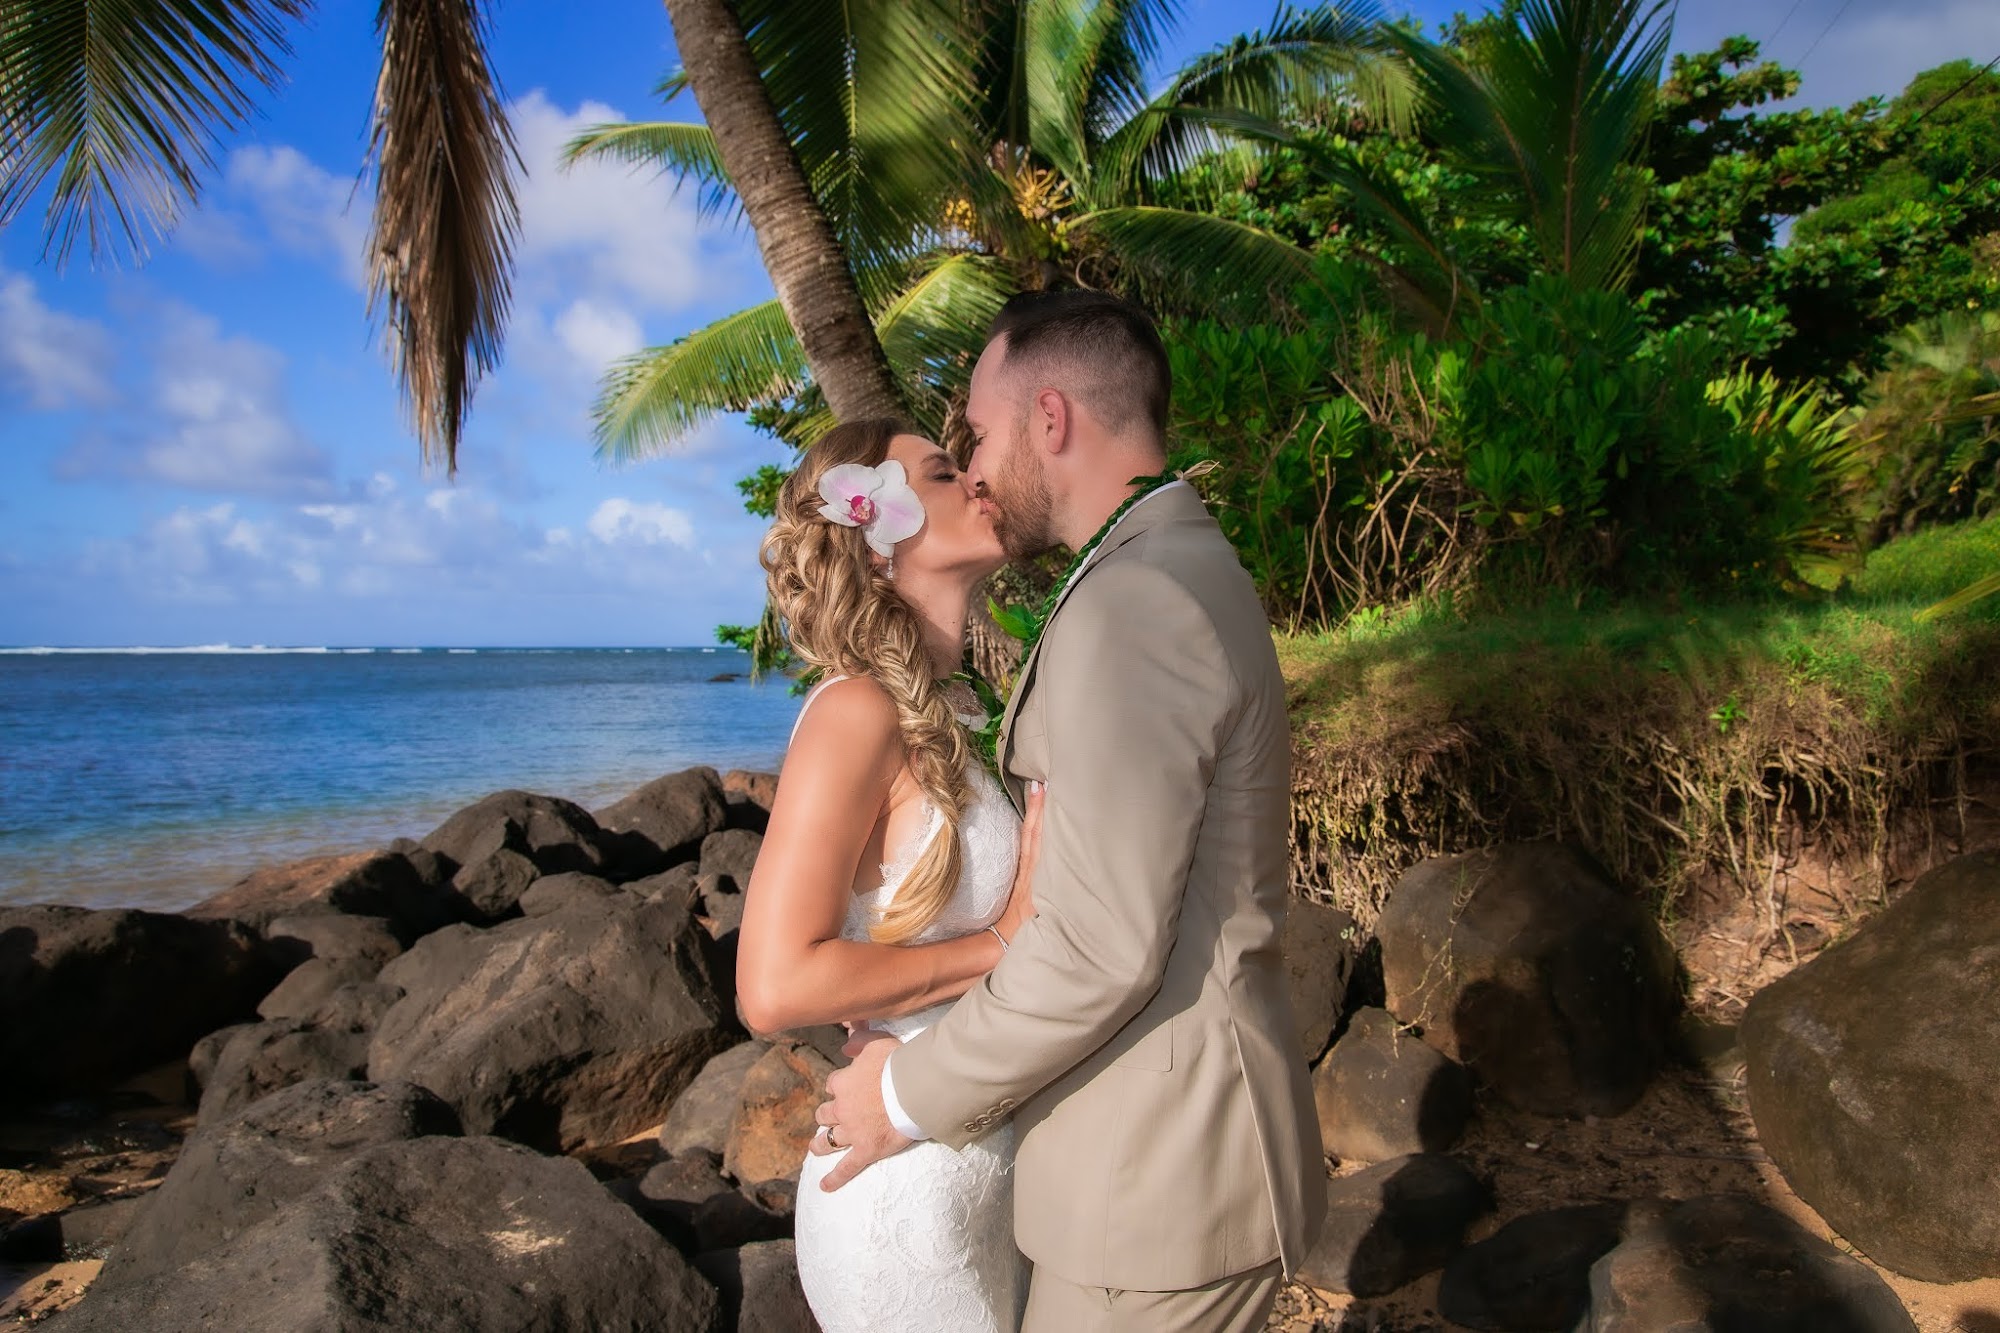 Kauai Tropical Weddings and Photography Kuhio Hwy, Kilauea Hawaii 96754